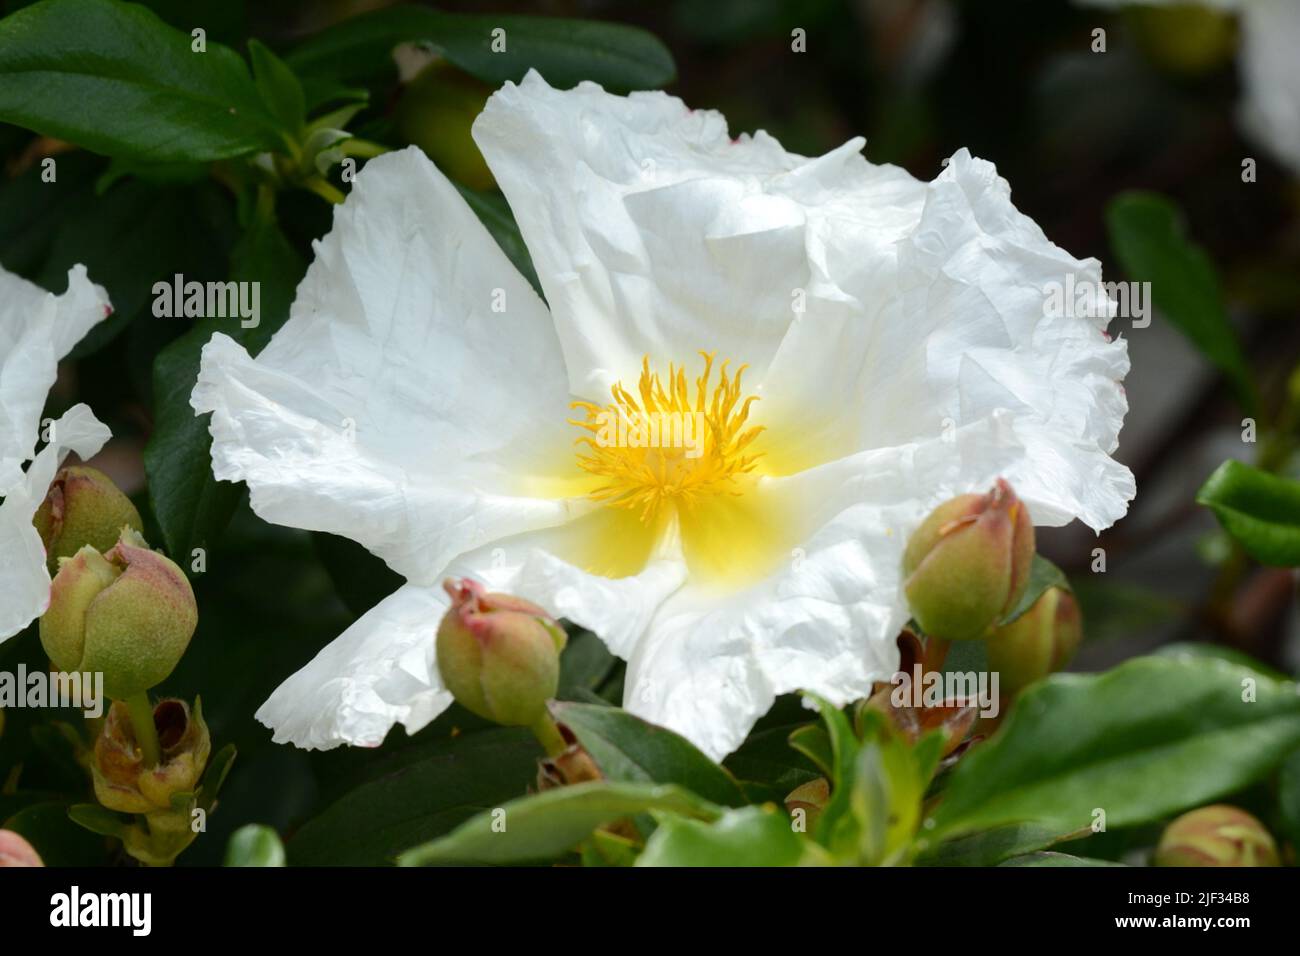 Cistus x platysephalus producing copious white flowers Stock Photo